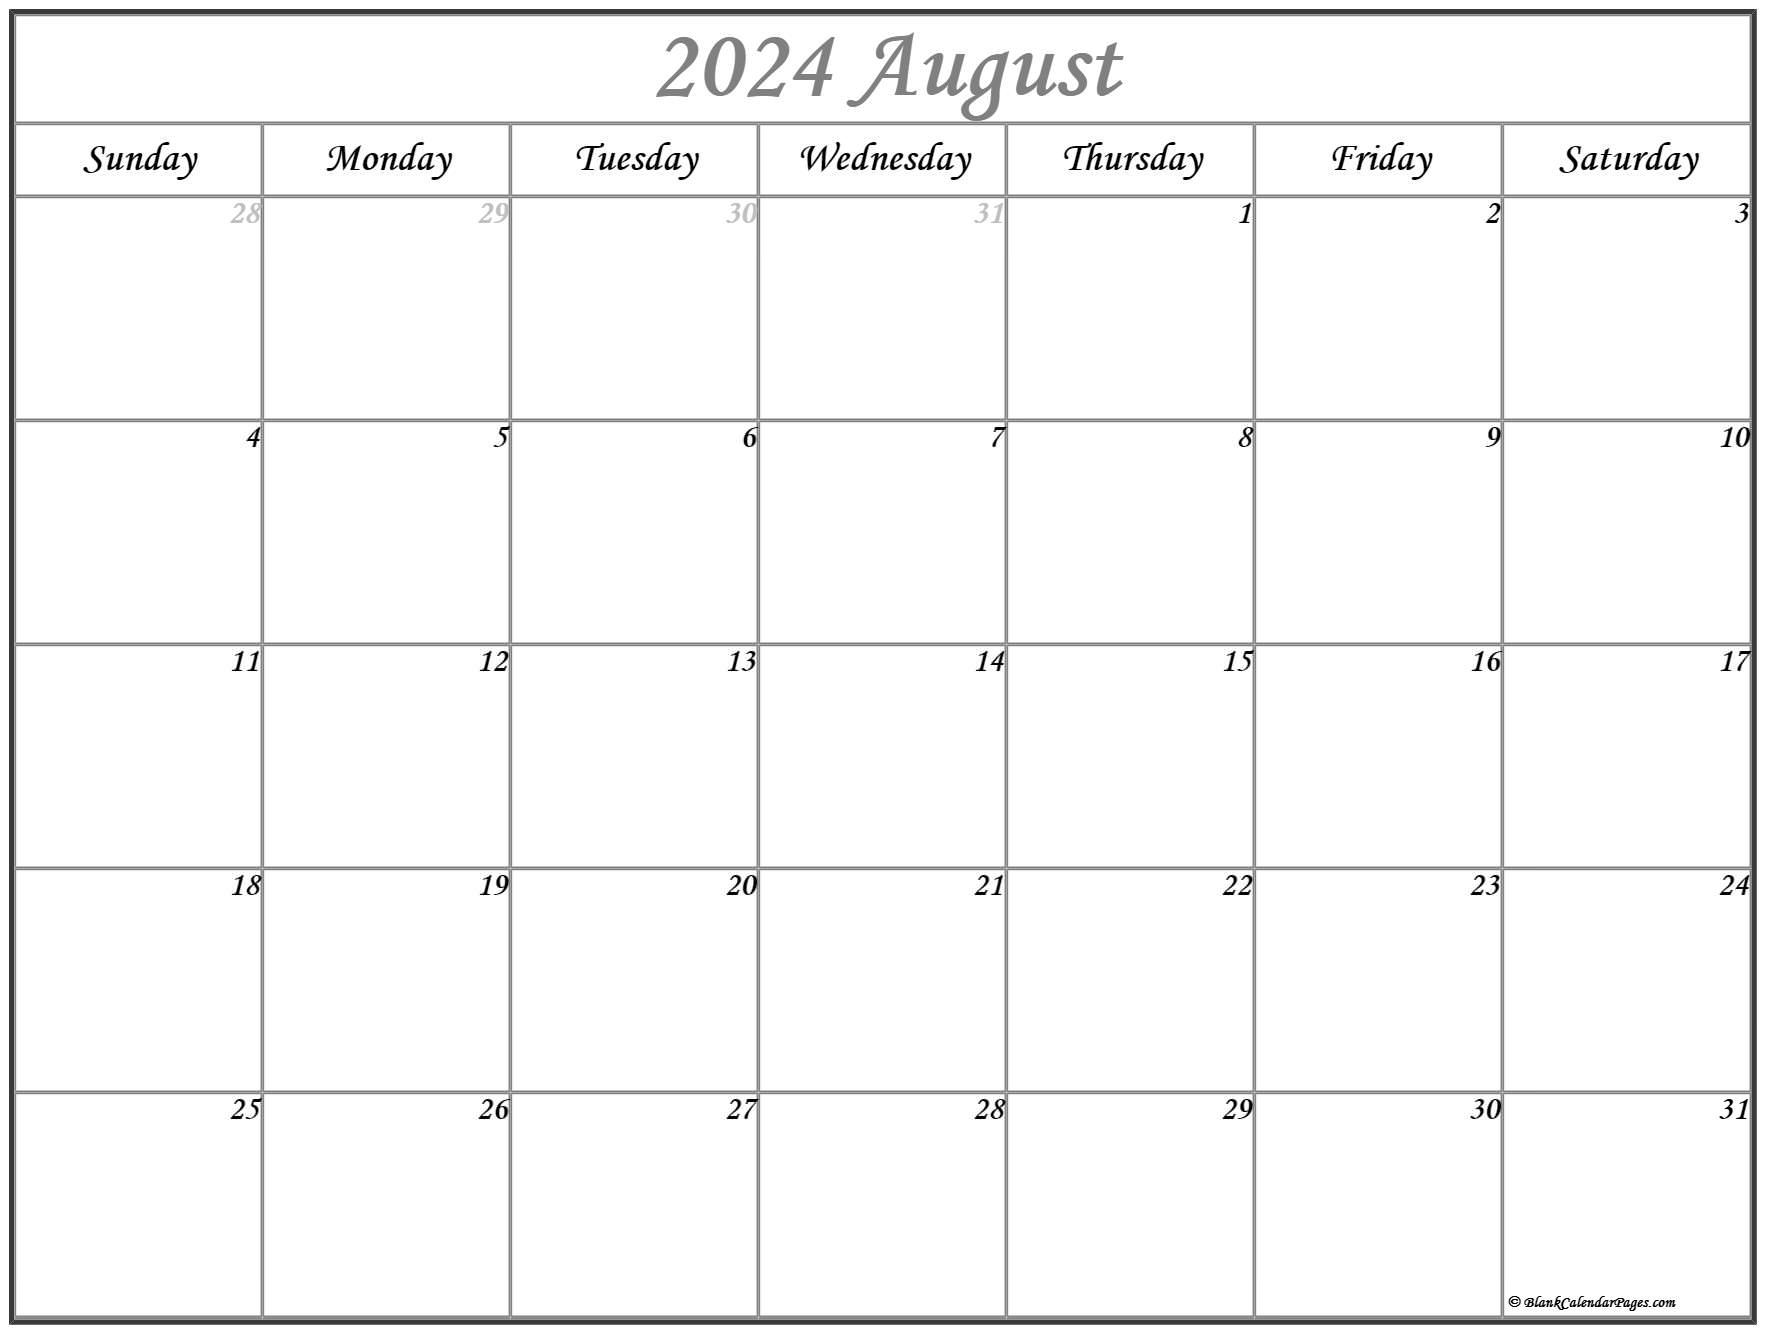 August 2022 calendar free printable calendar